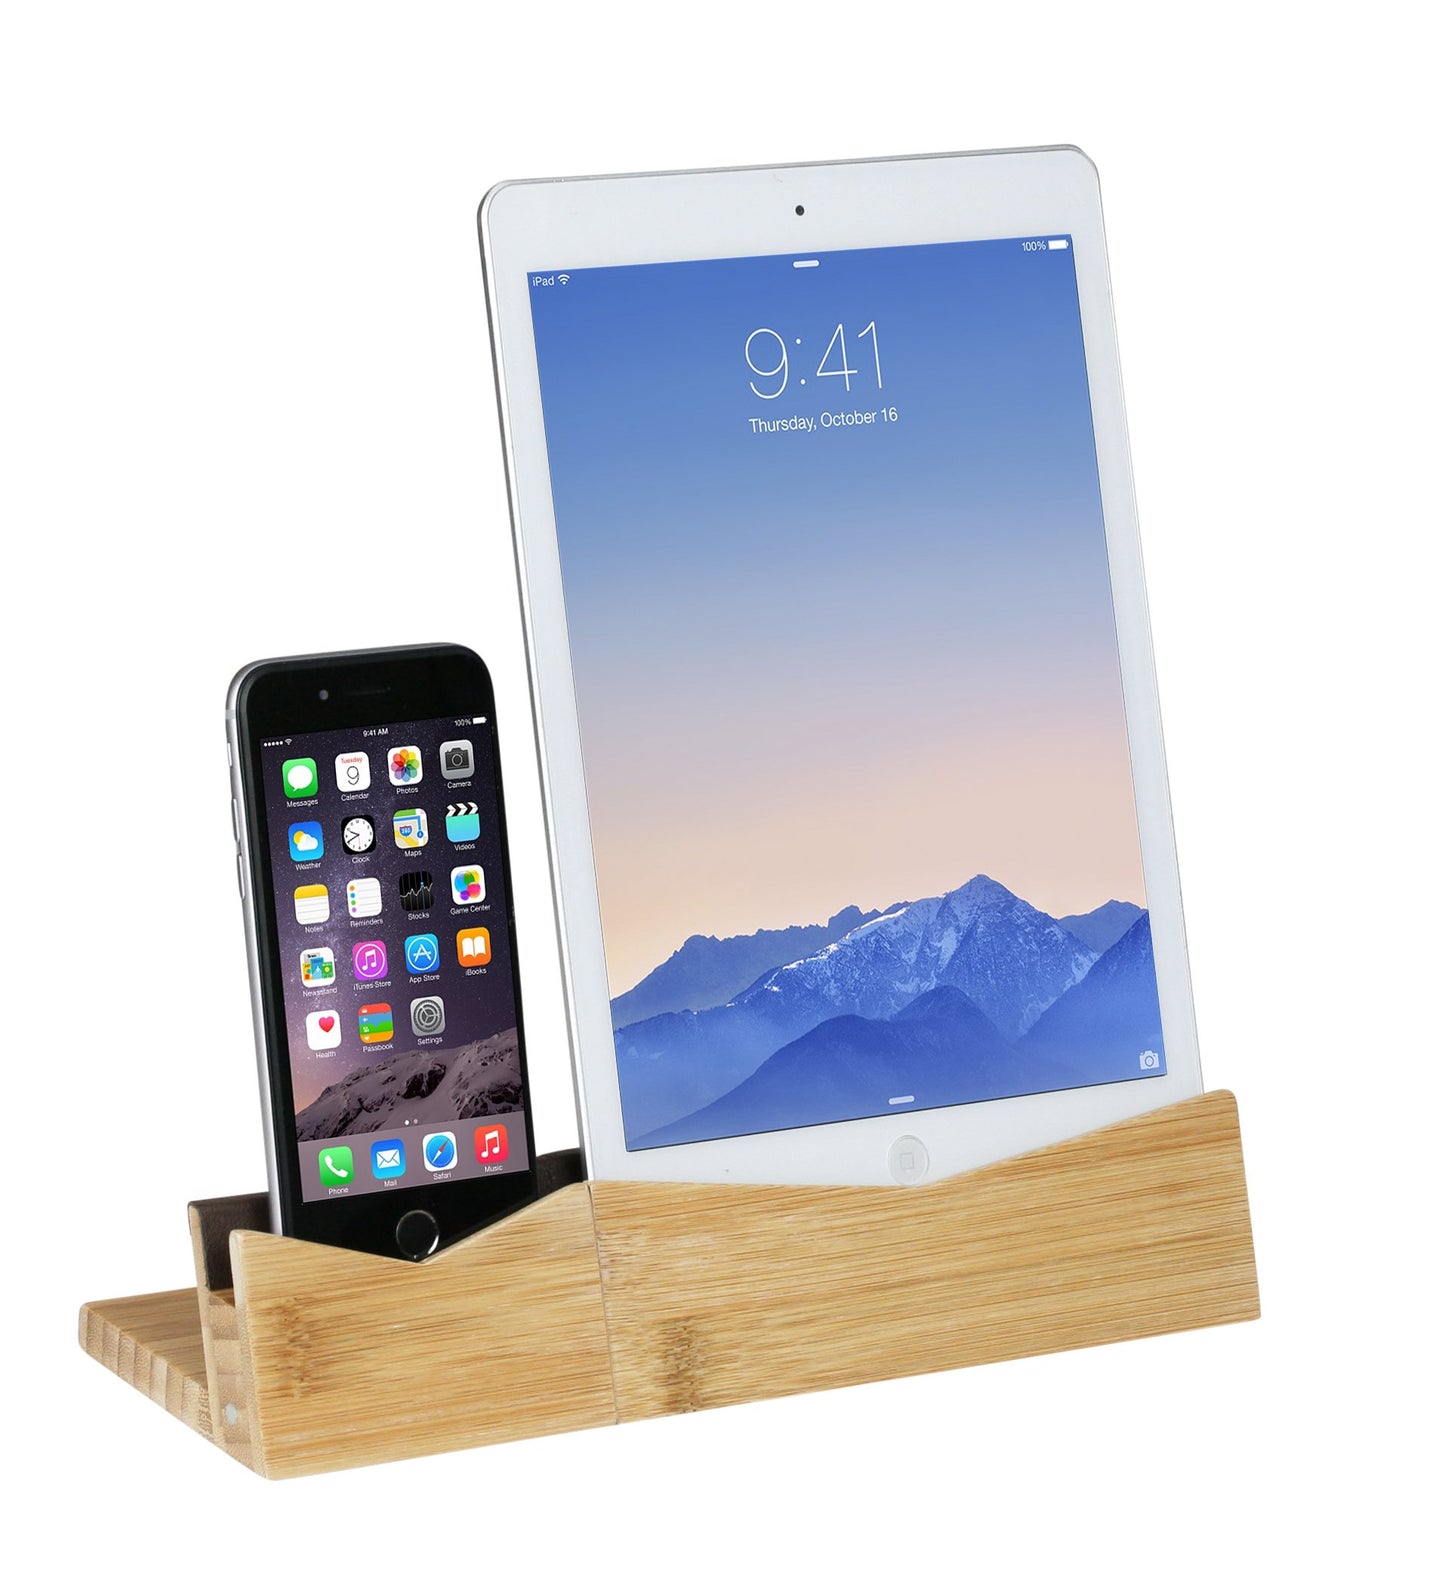 Bamboo iPad Recipe Dock and Holder - Great Useful Stuff